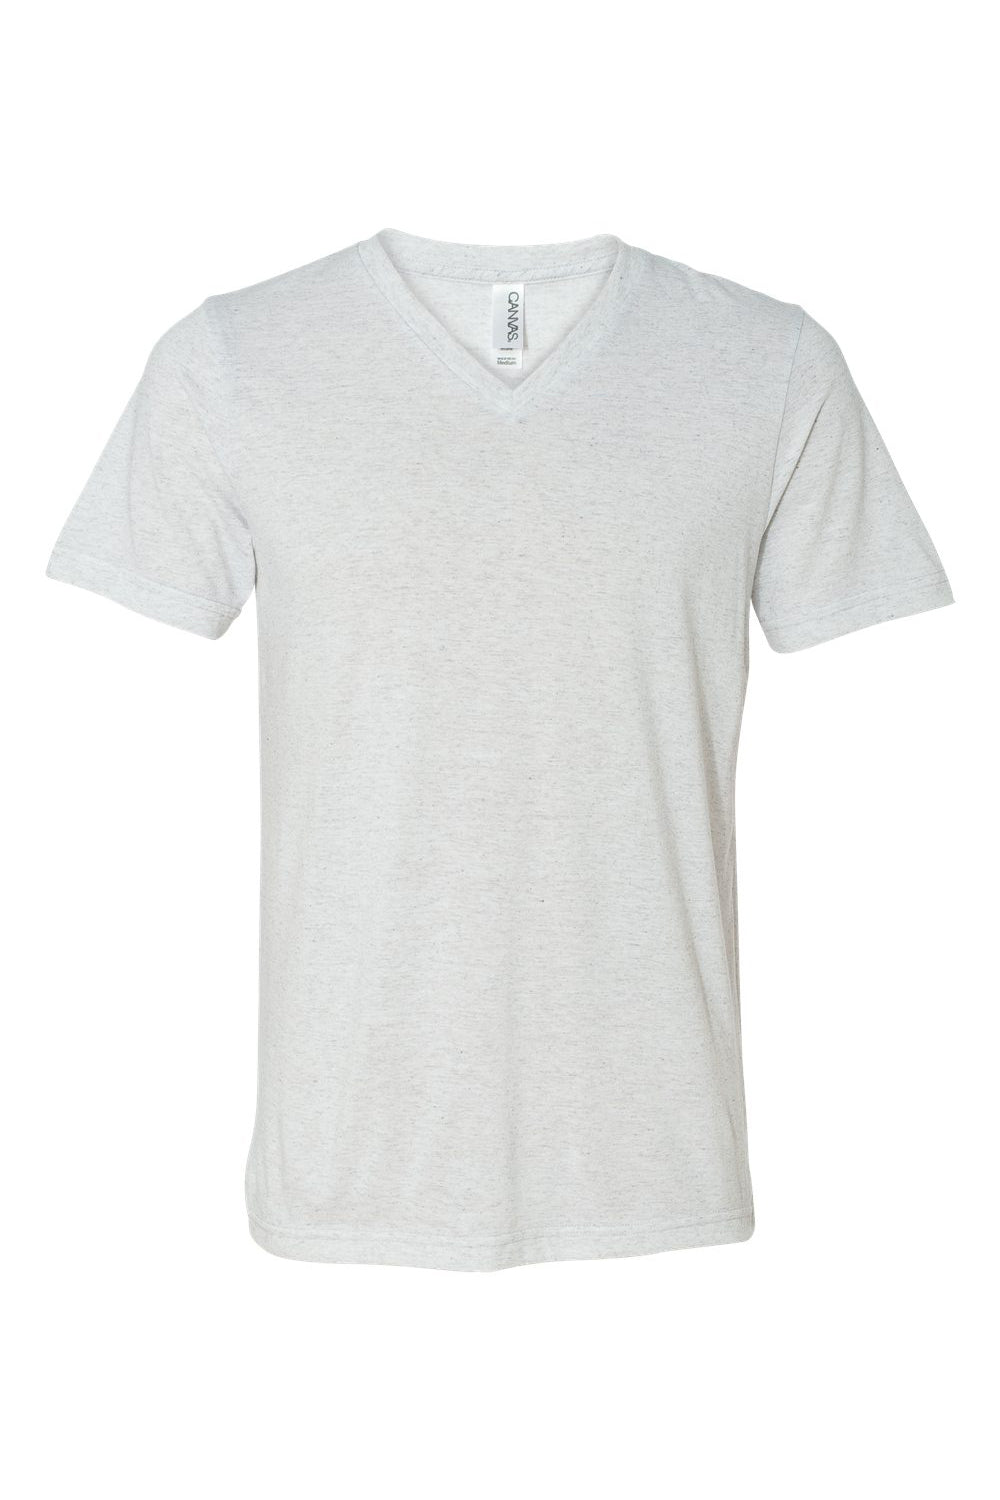 Bella + Canvas BC3415/3415C/3415 Mens Short Sleeve V-Neck T-Shirt White Fleck Flat Front